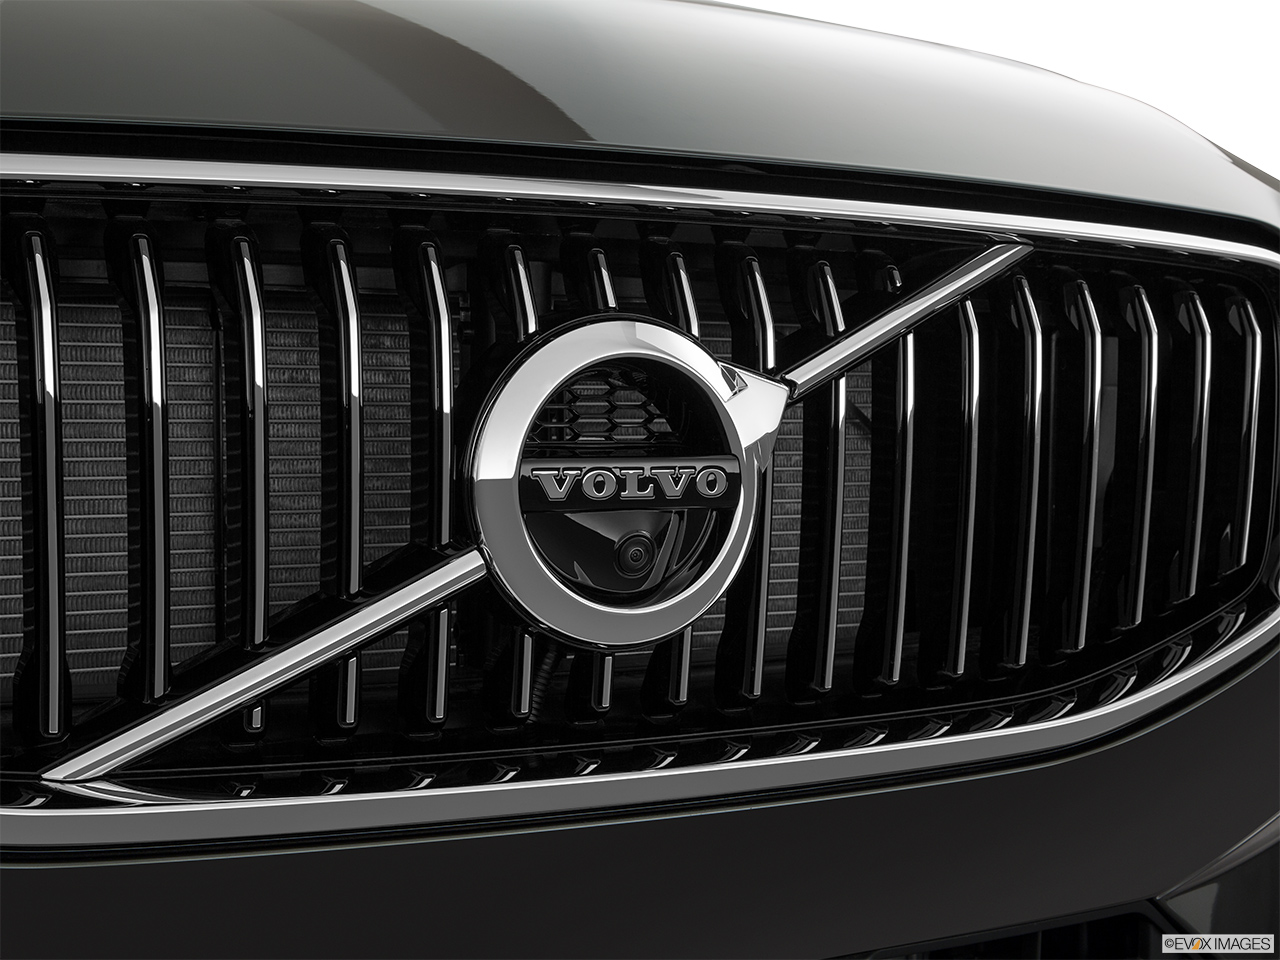 2019 Volvo XC60 T6 Inscription Rear manufacture badge/emblem 